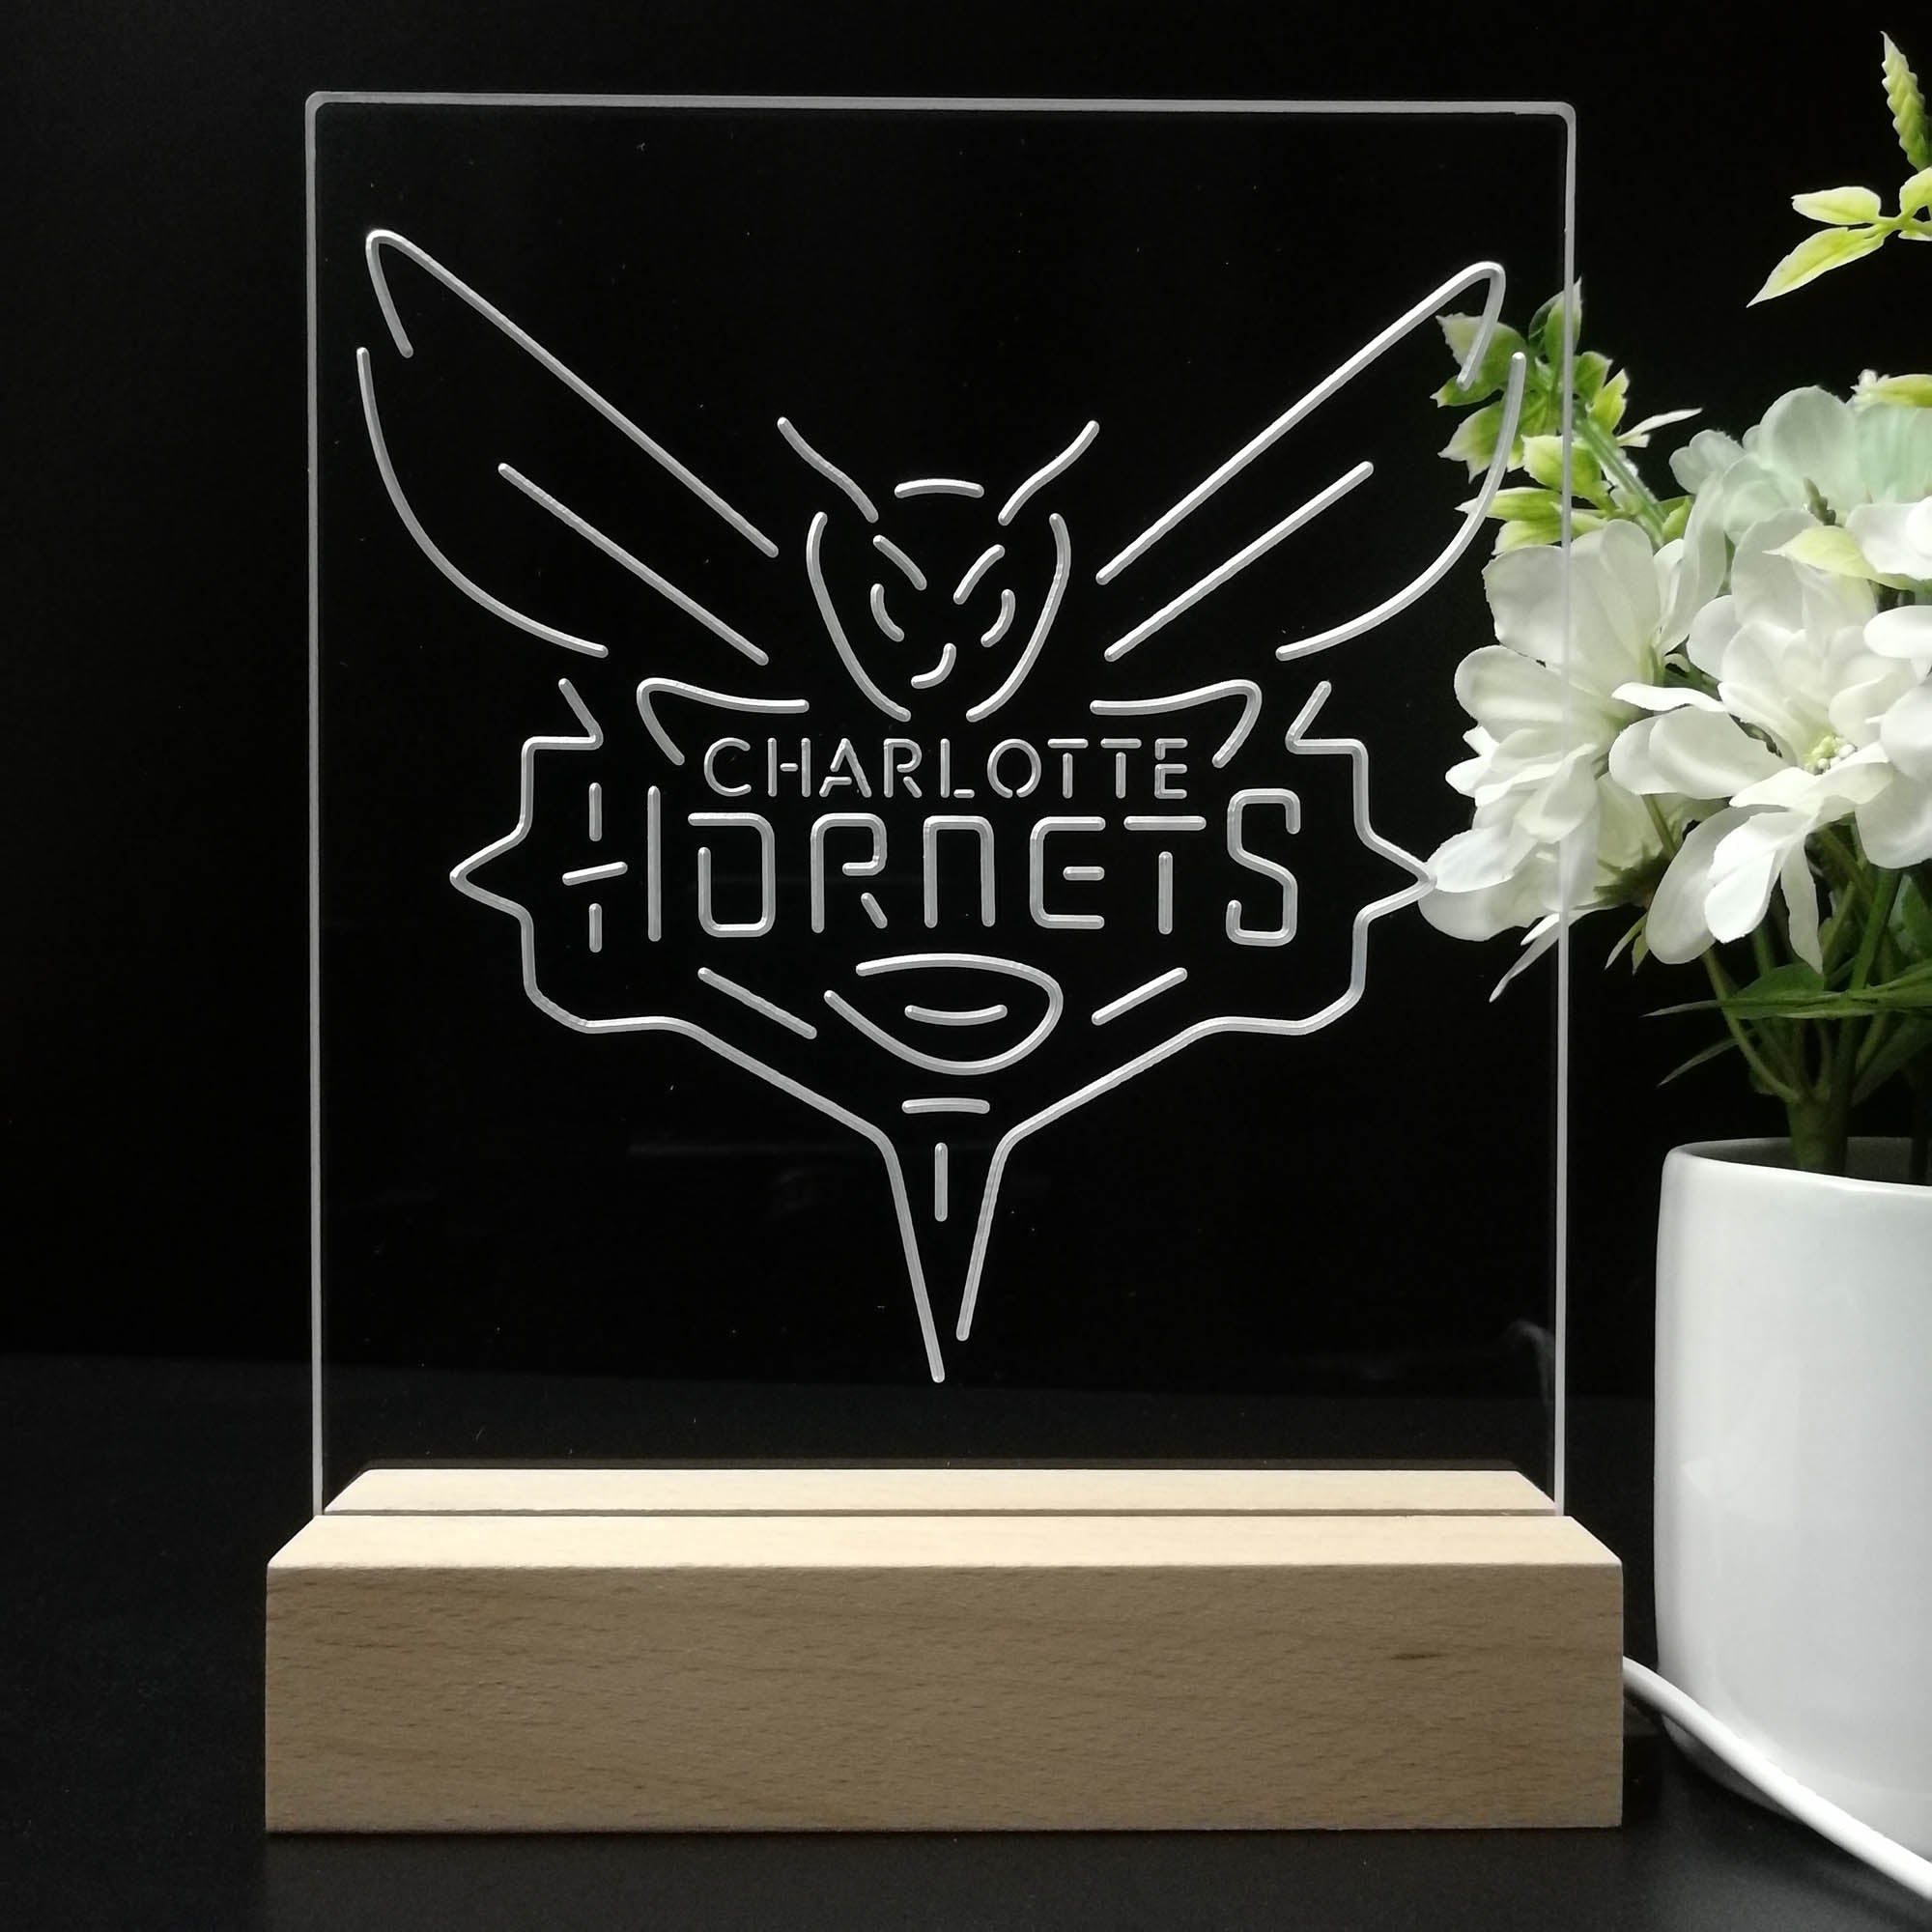 Charlotte Hornets 3D LED Optical Illusion Sport Team Night Light